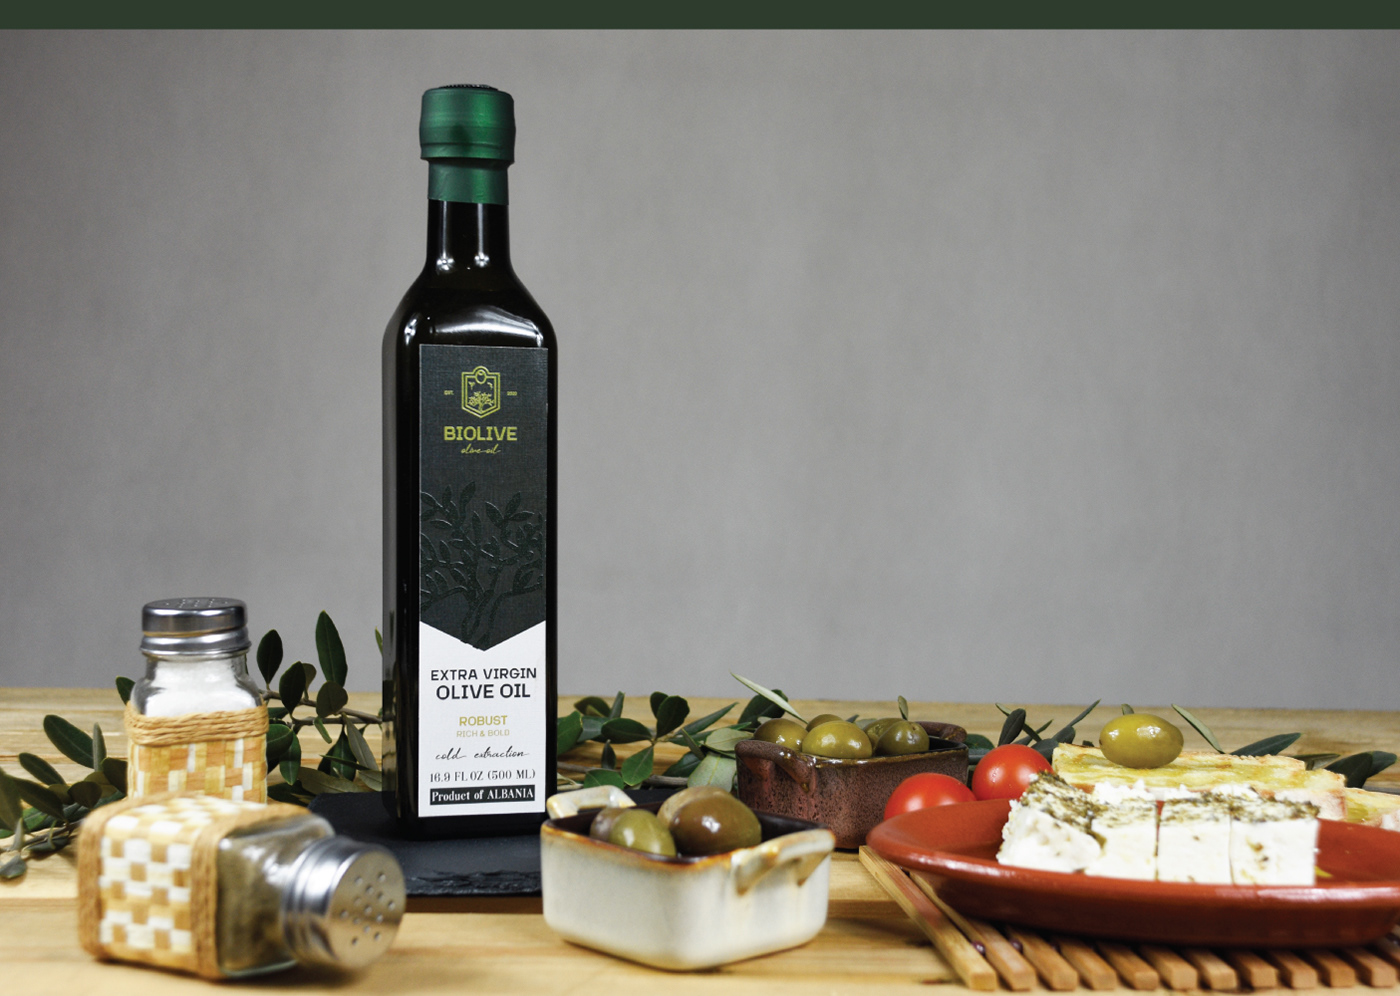 olive oil Albania Berat Greece Packaging Logo Design visual identity agihaxhimurati brand identy